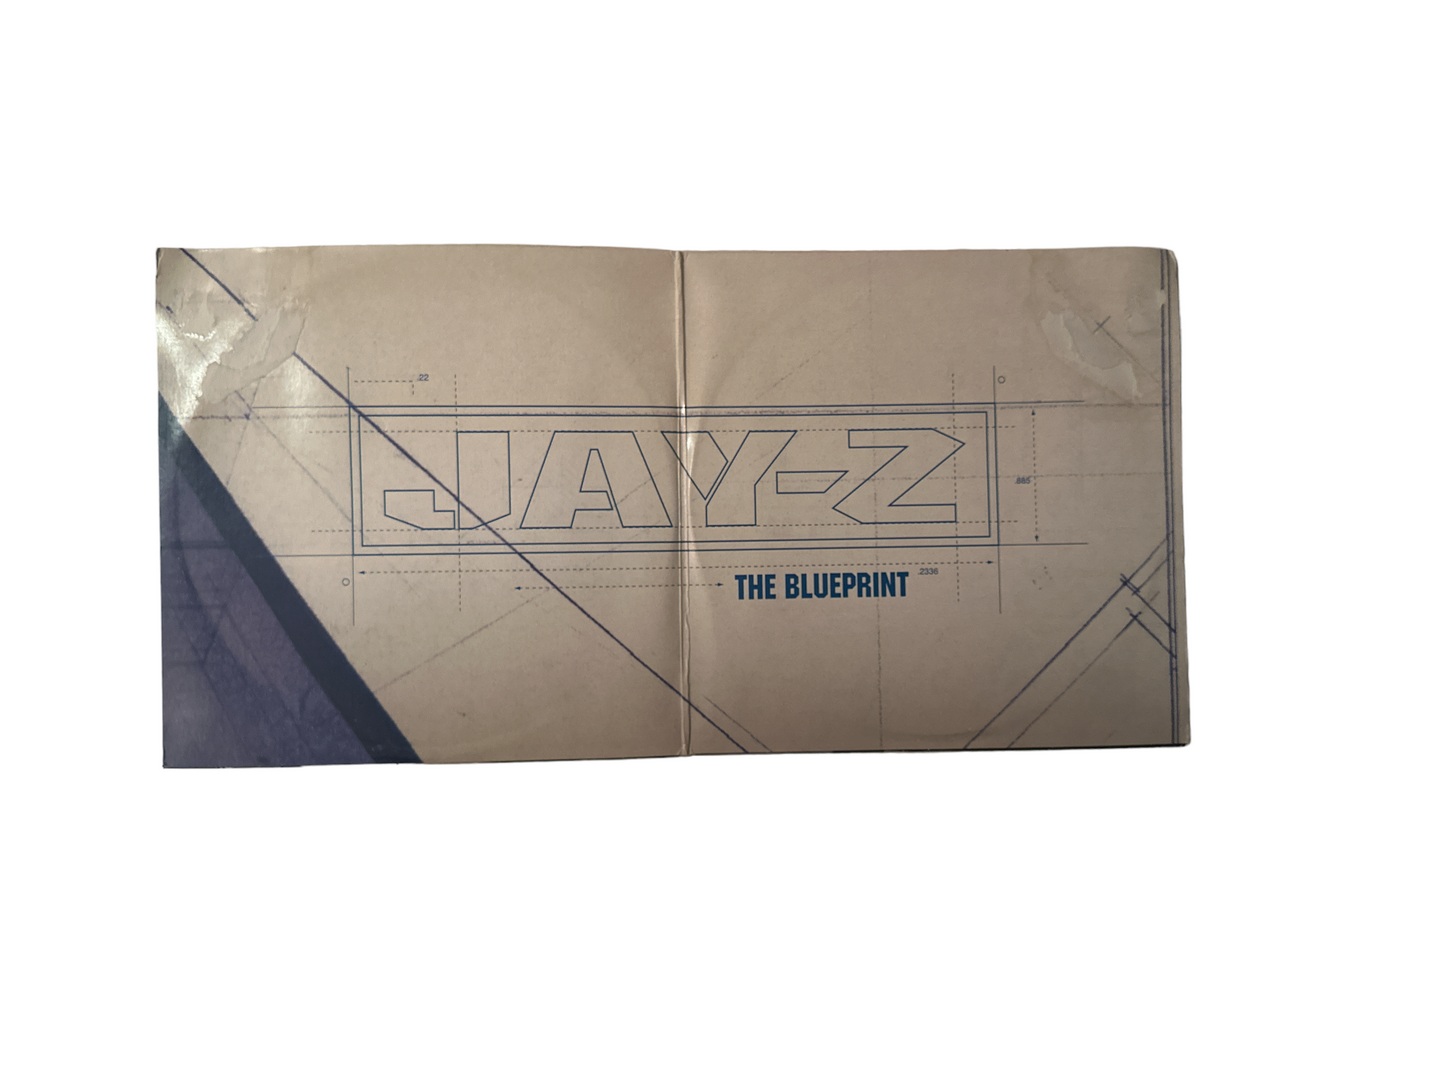 Jay Z - The Blueprint - Original Pressing